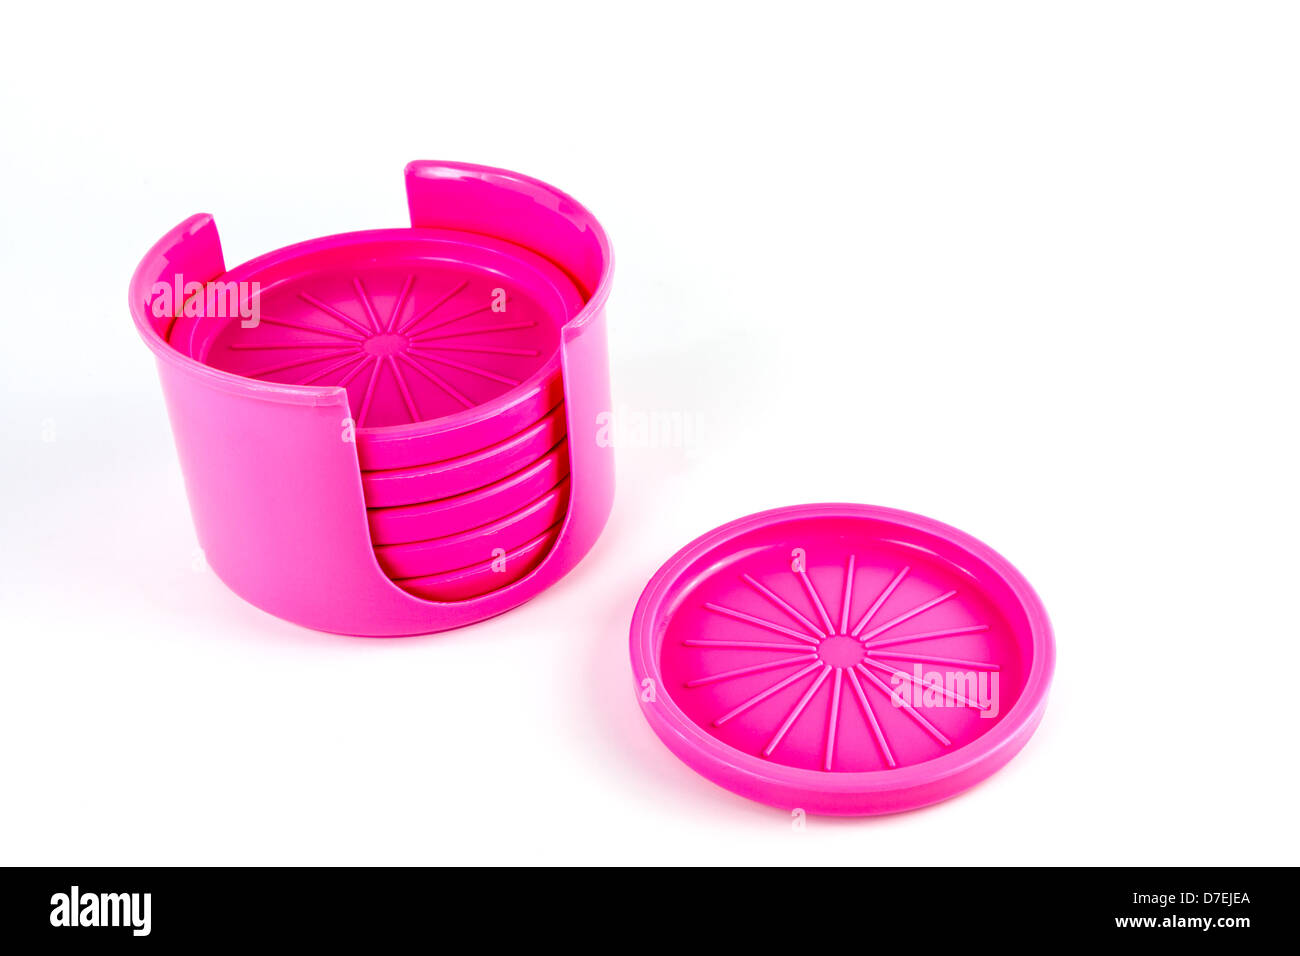 Pink plastic glass plates Stock Photo